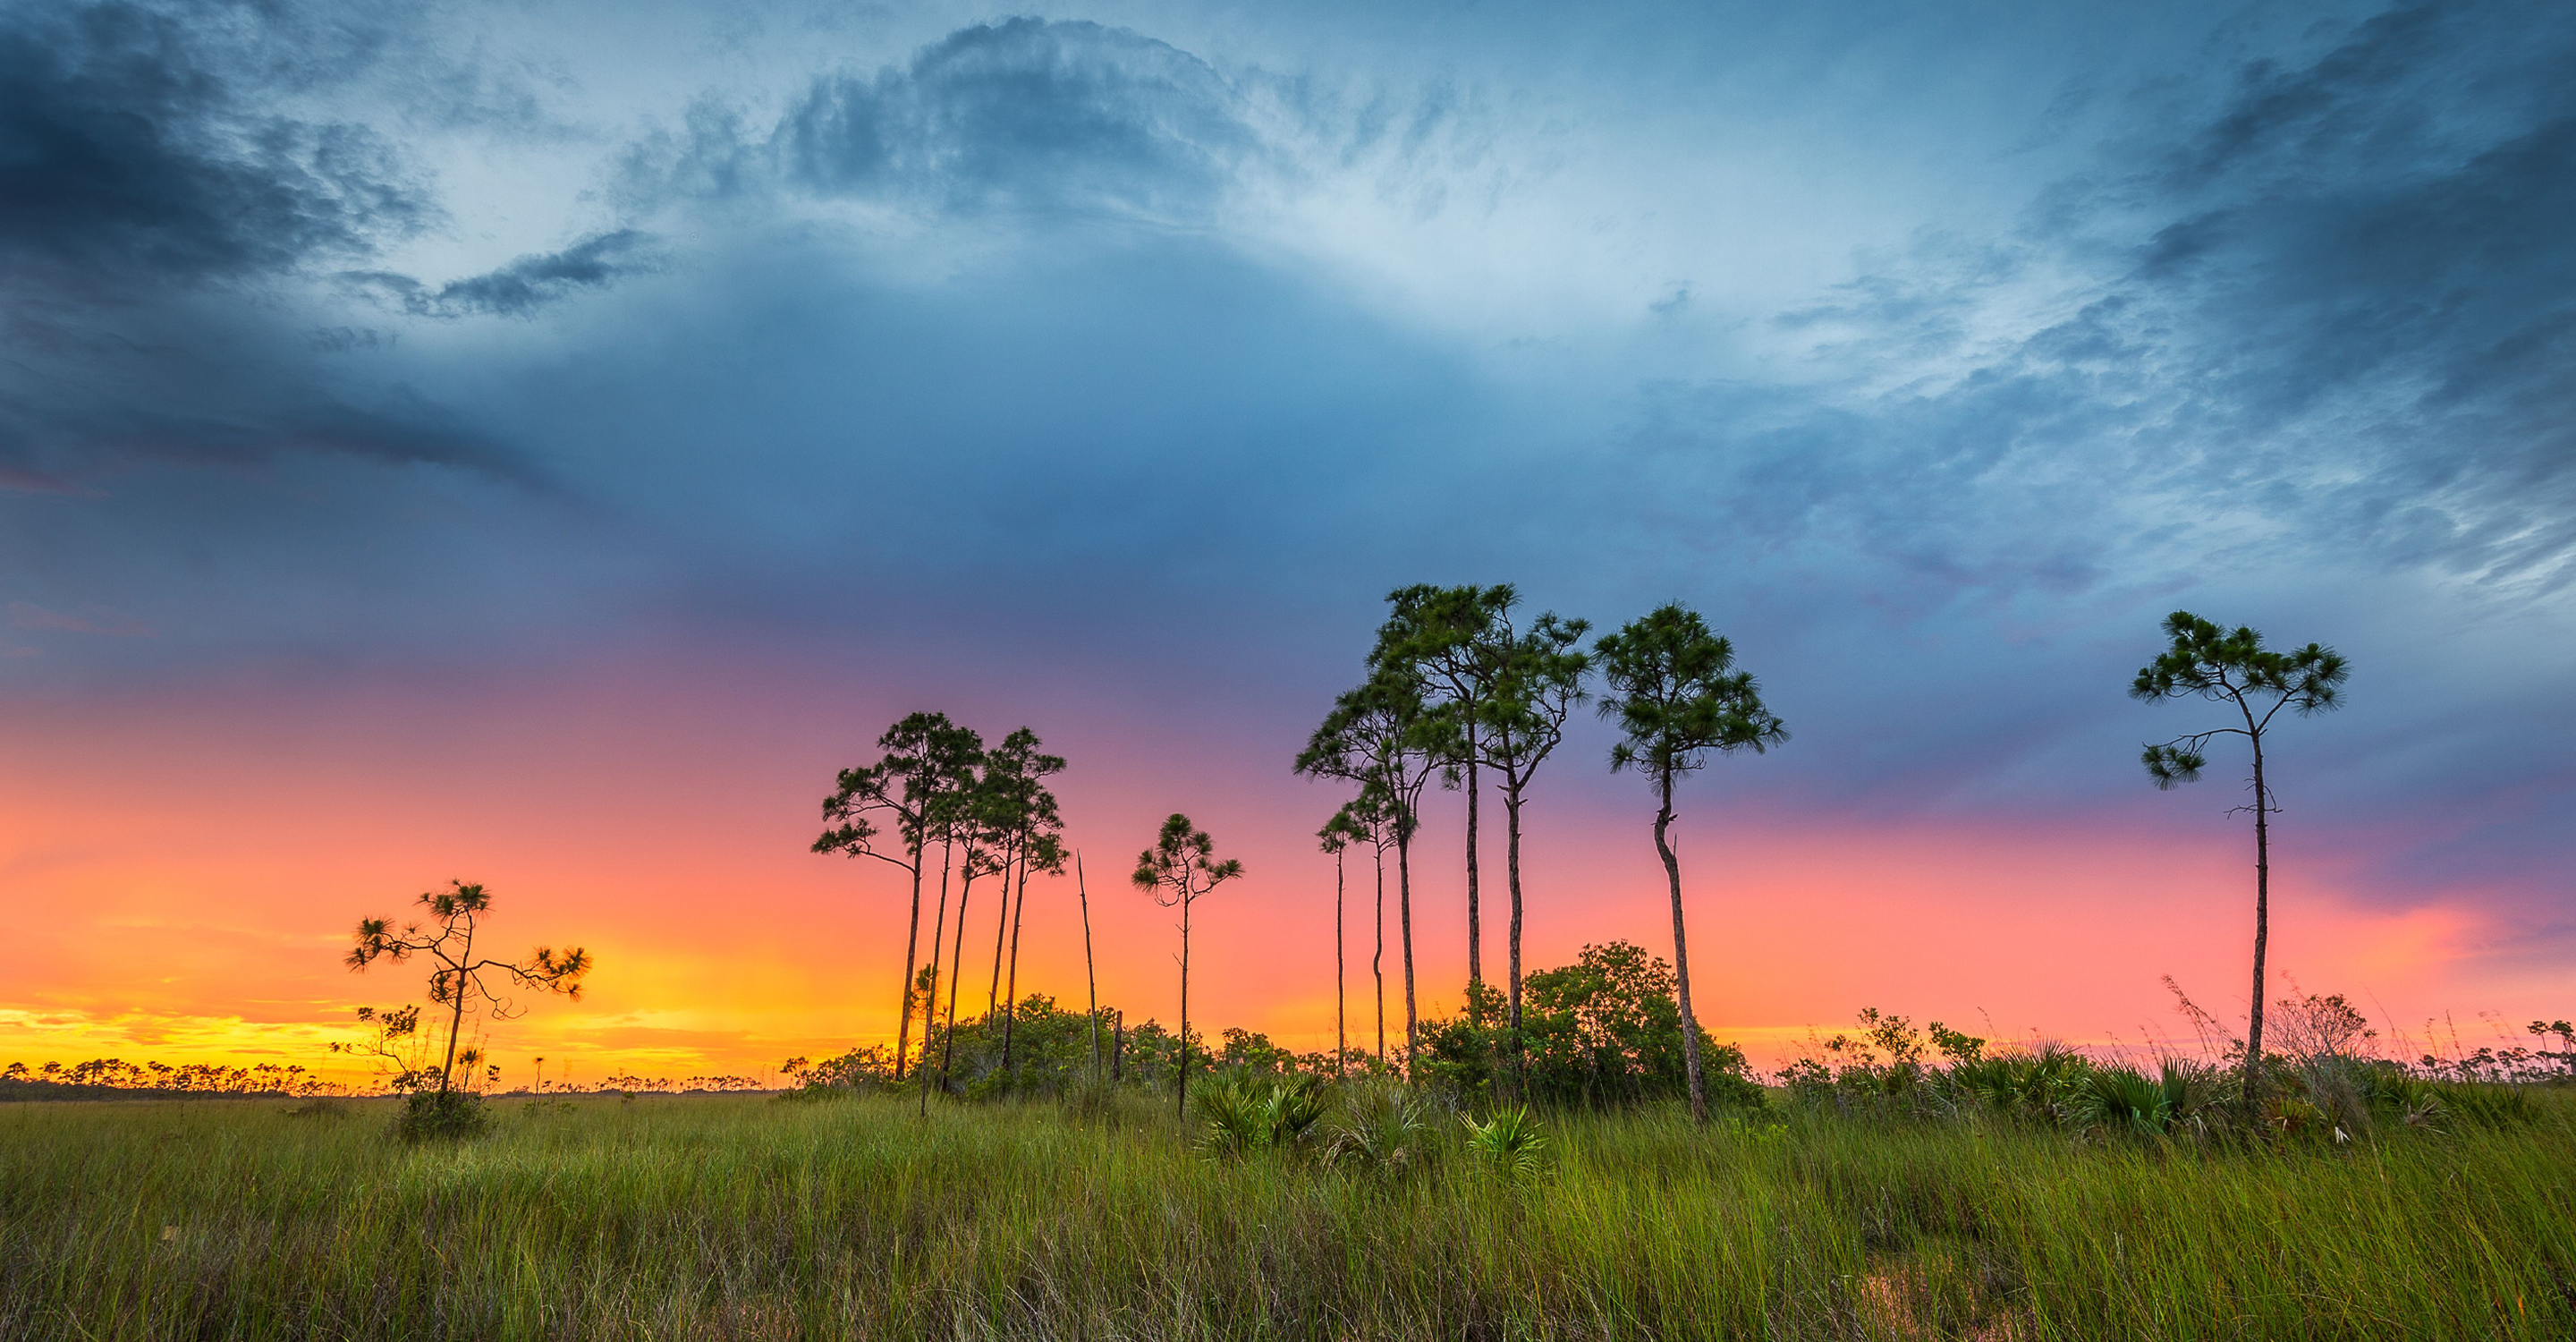 Landscape sunset shot of palm trees in Key West, Florida, United States